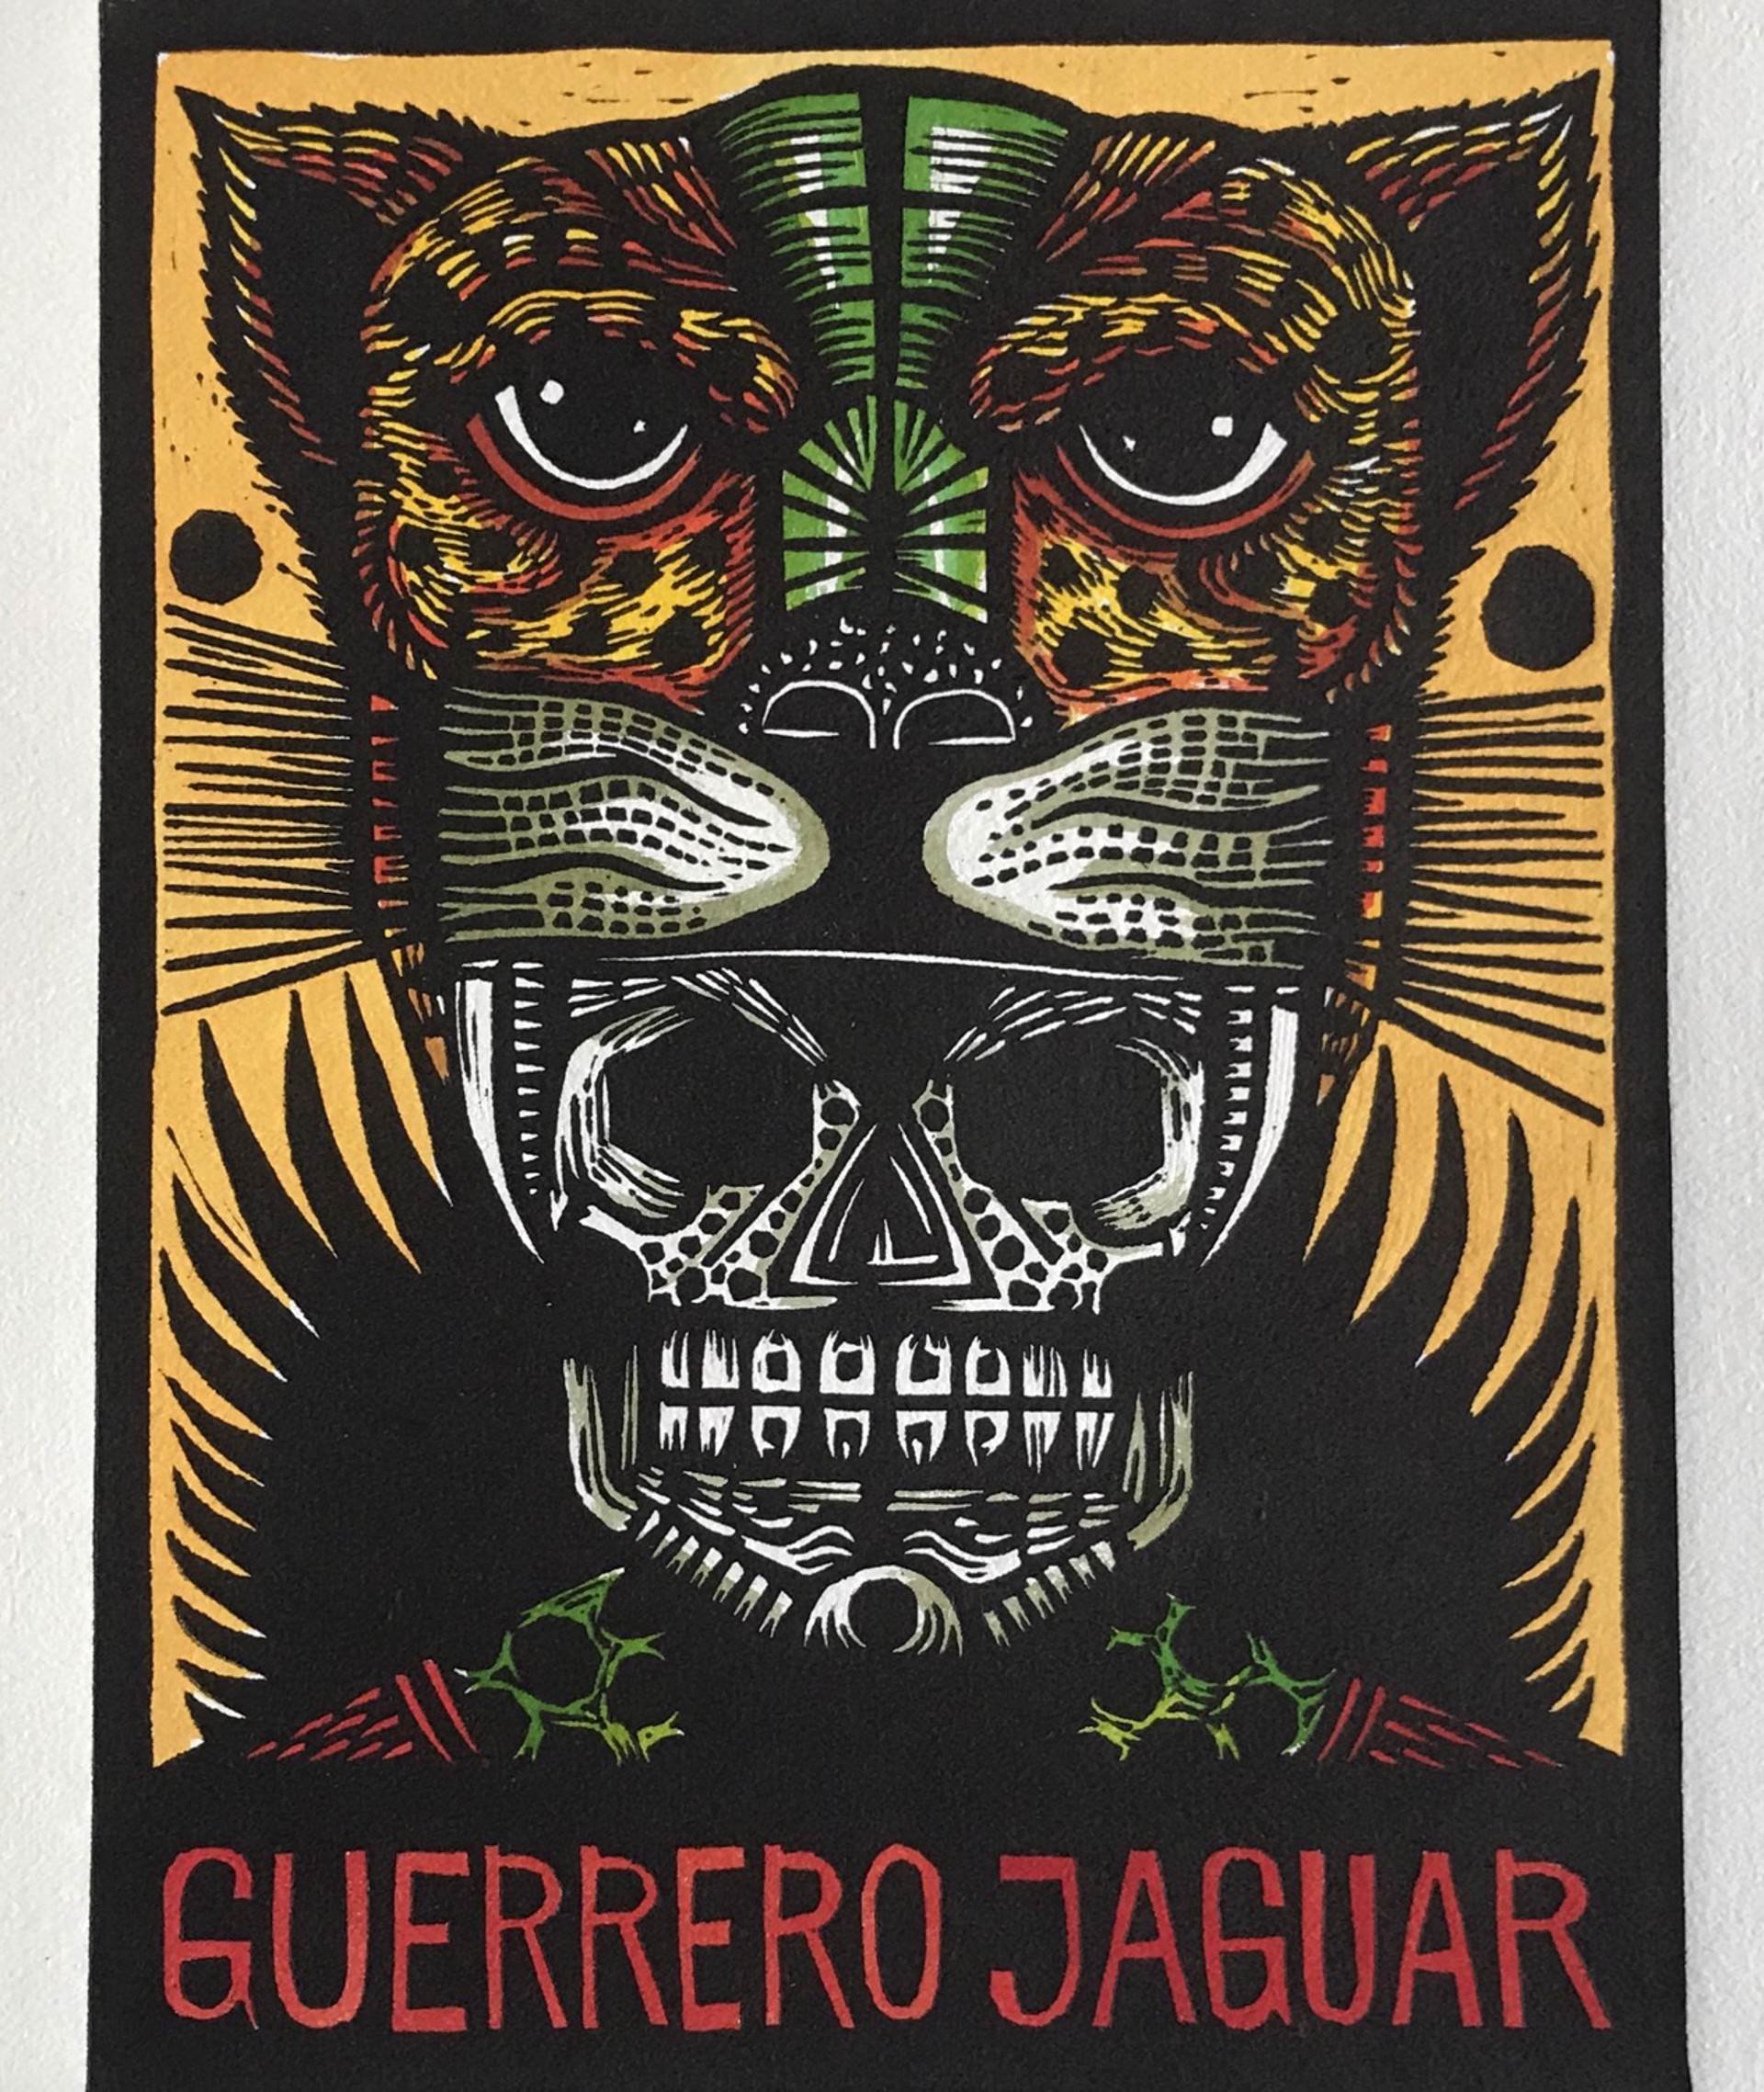 Guerrero Jaguar by El Pinche Grabador